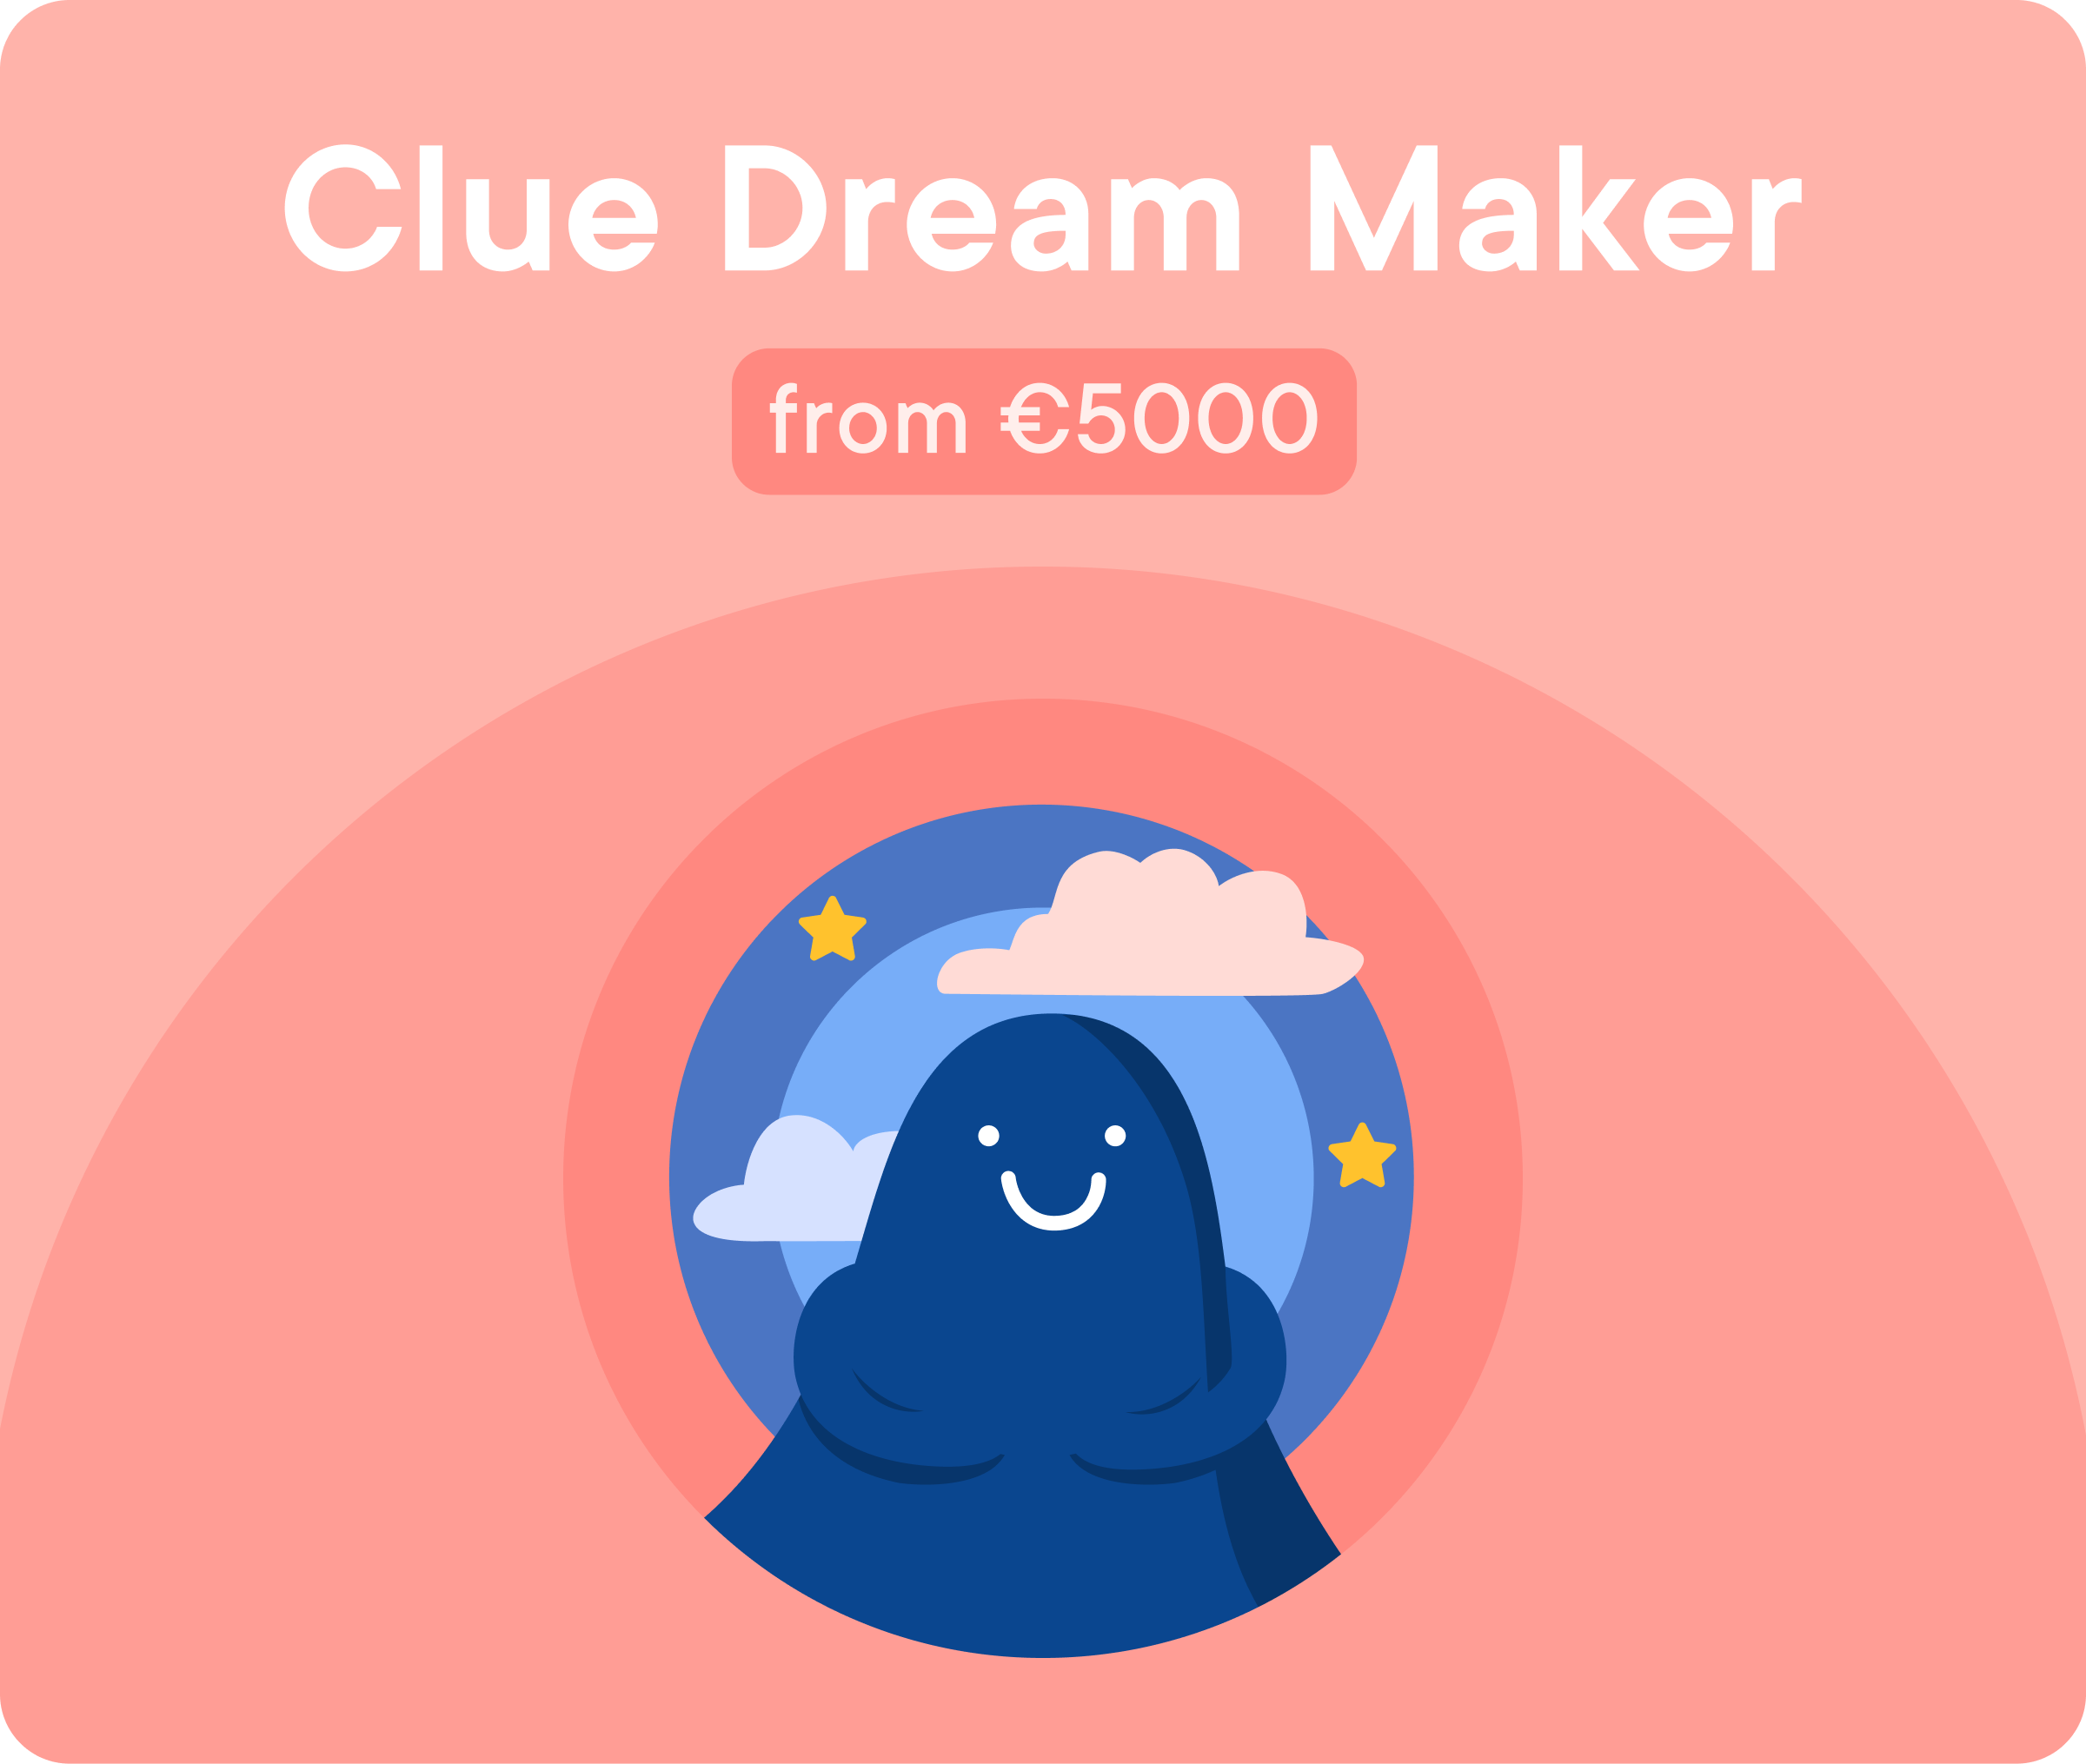 Clue Dream Maker from €5000